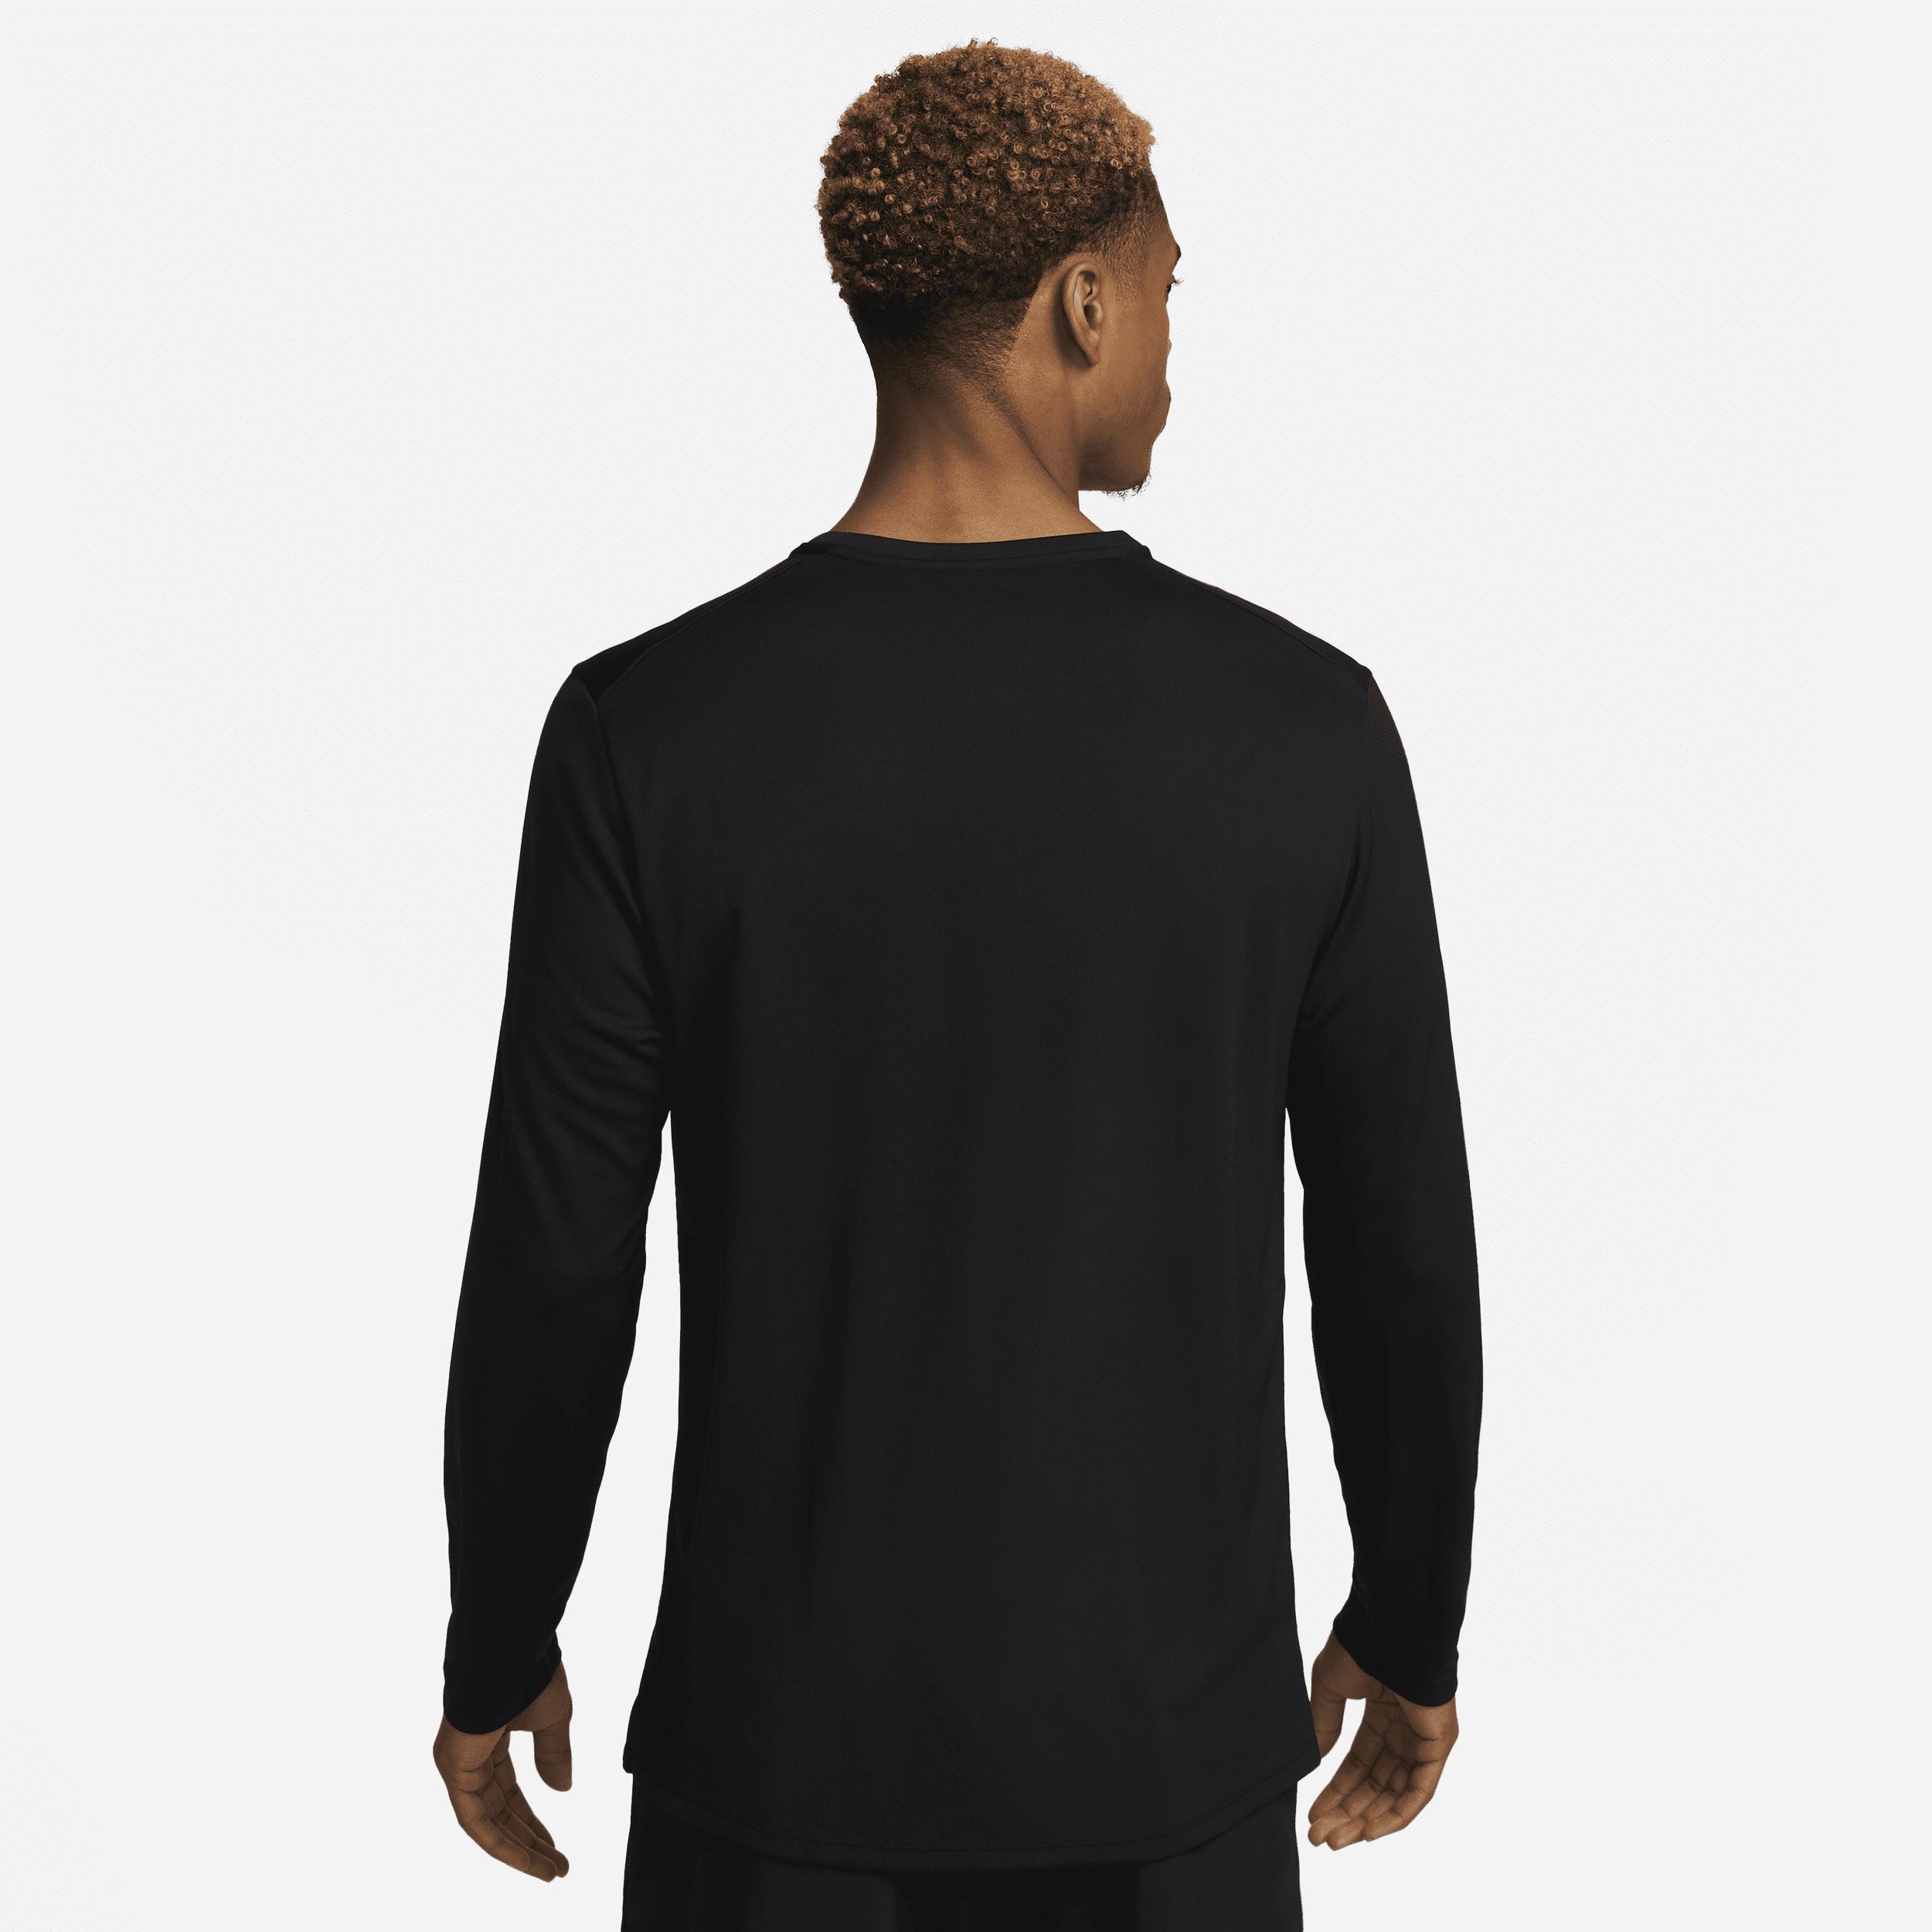 Nike Miler Men's Dri-FIT UV Long-Sleeve Running Top. Nike ID